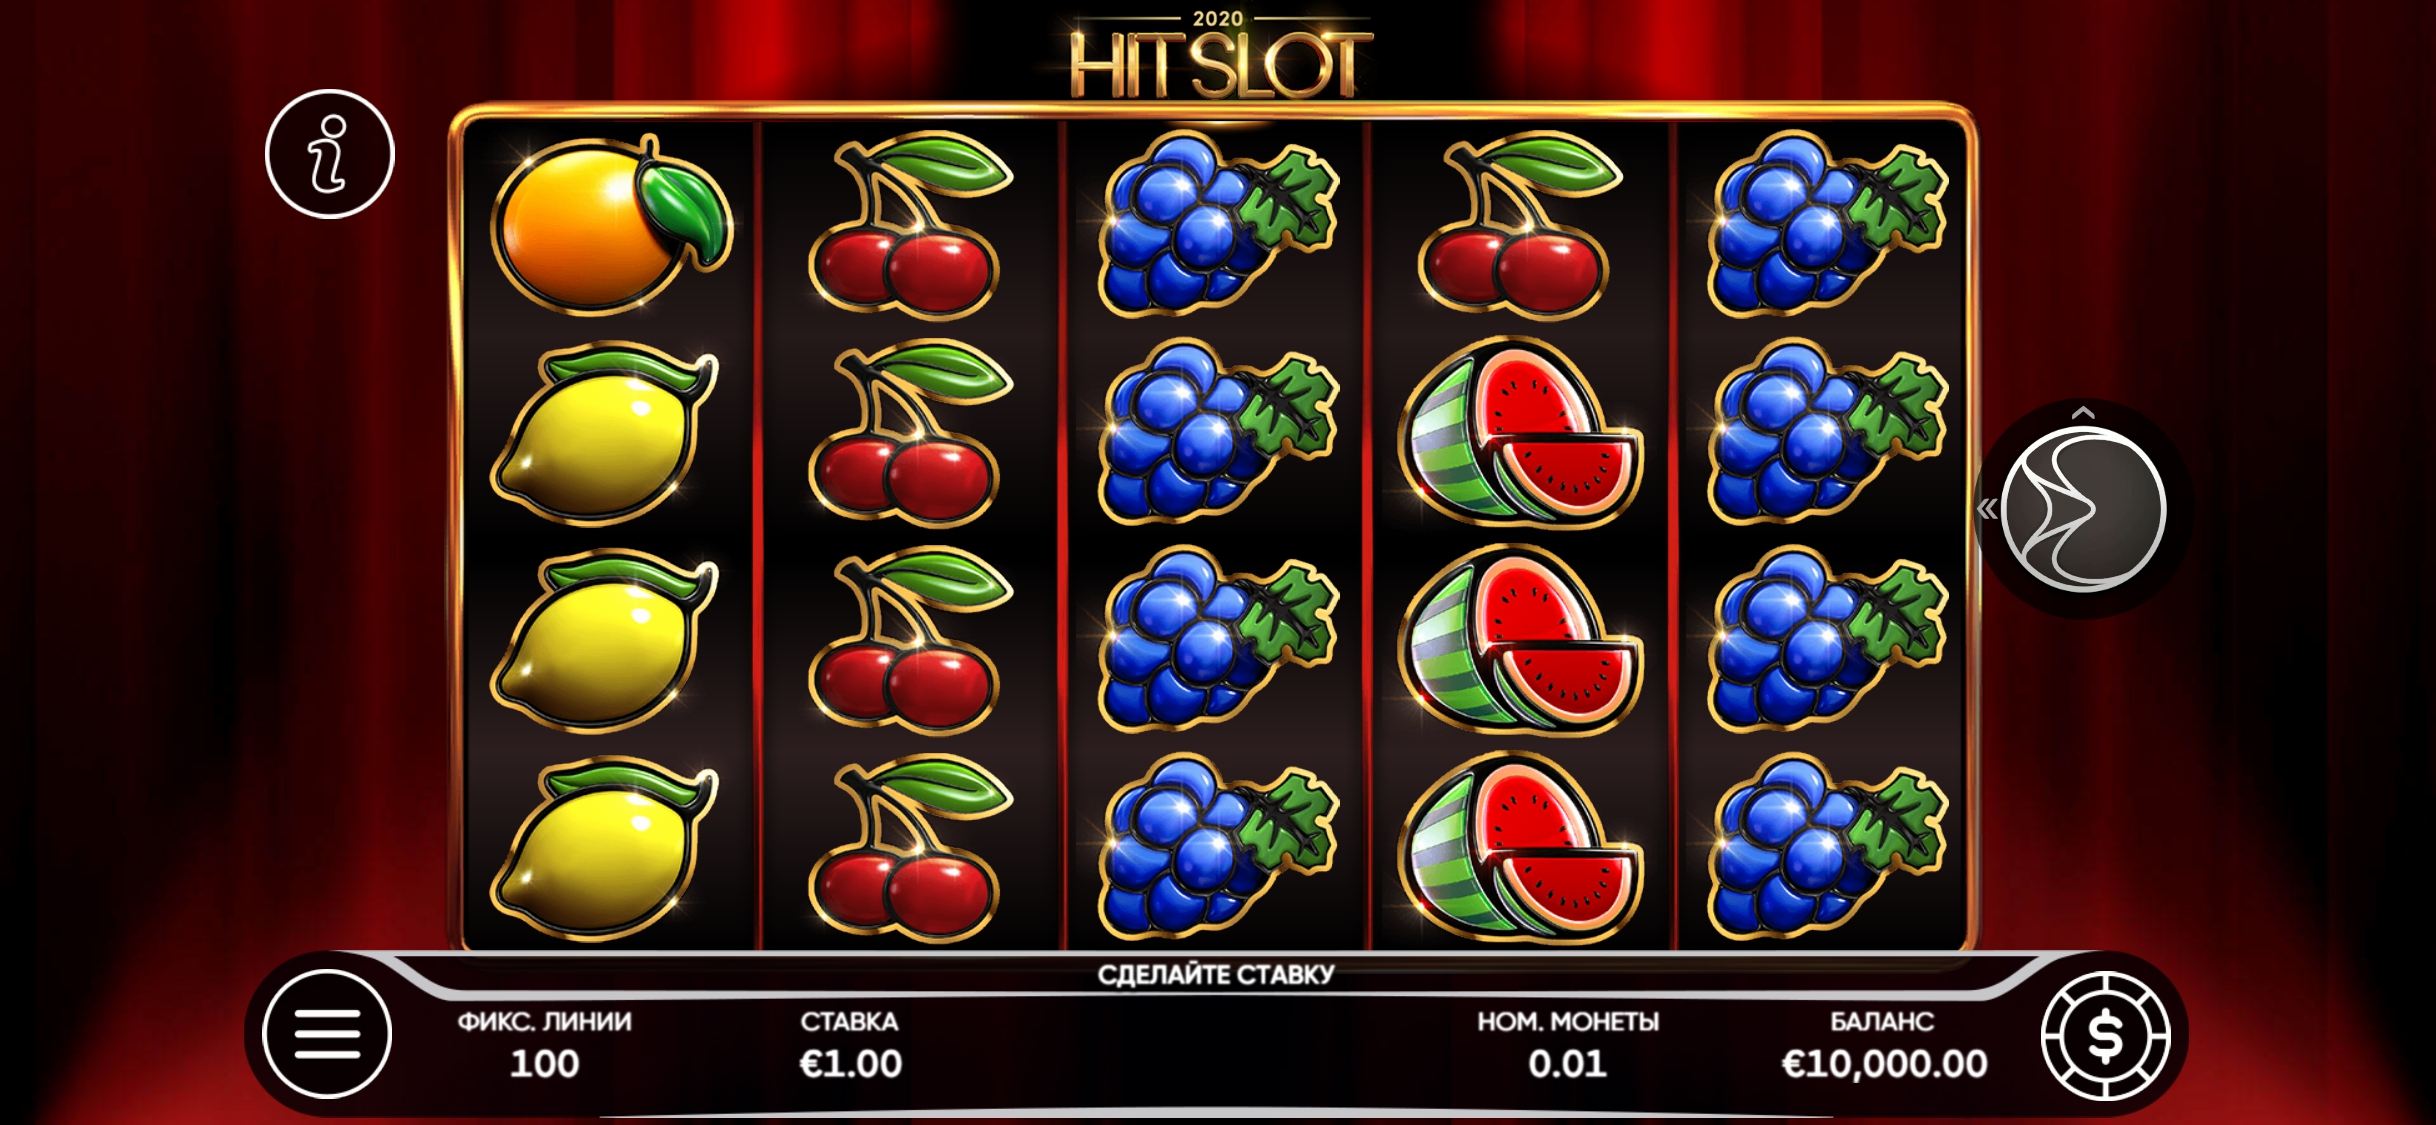 4 Ra Bet Casino Mobile Slot Games Review